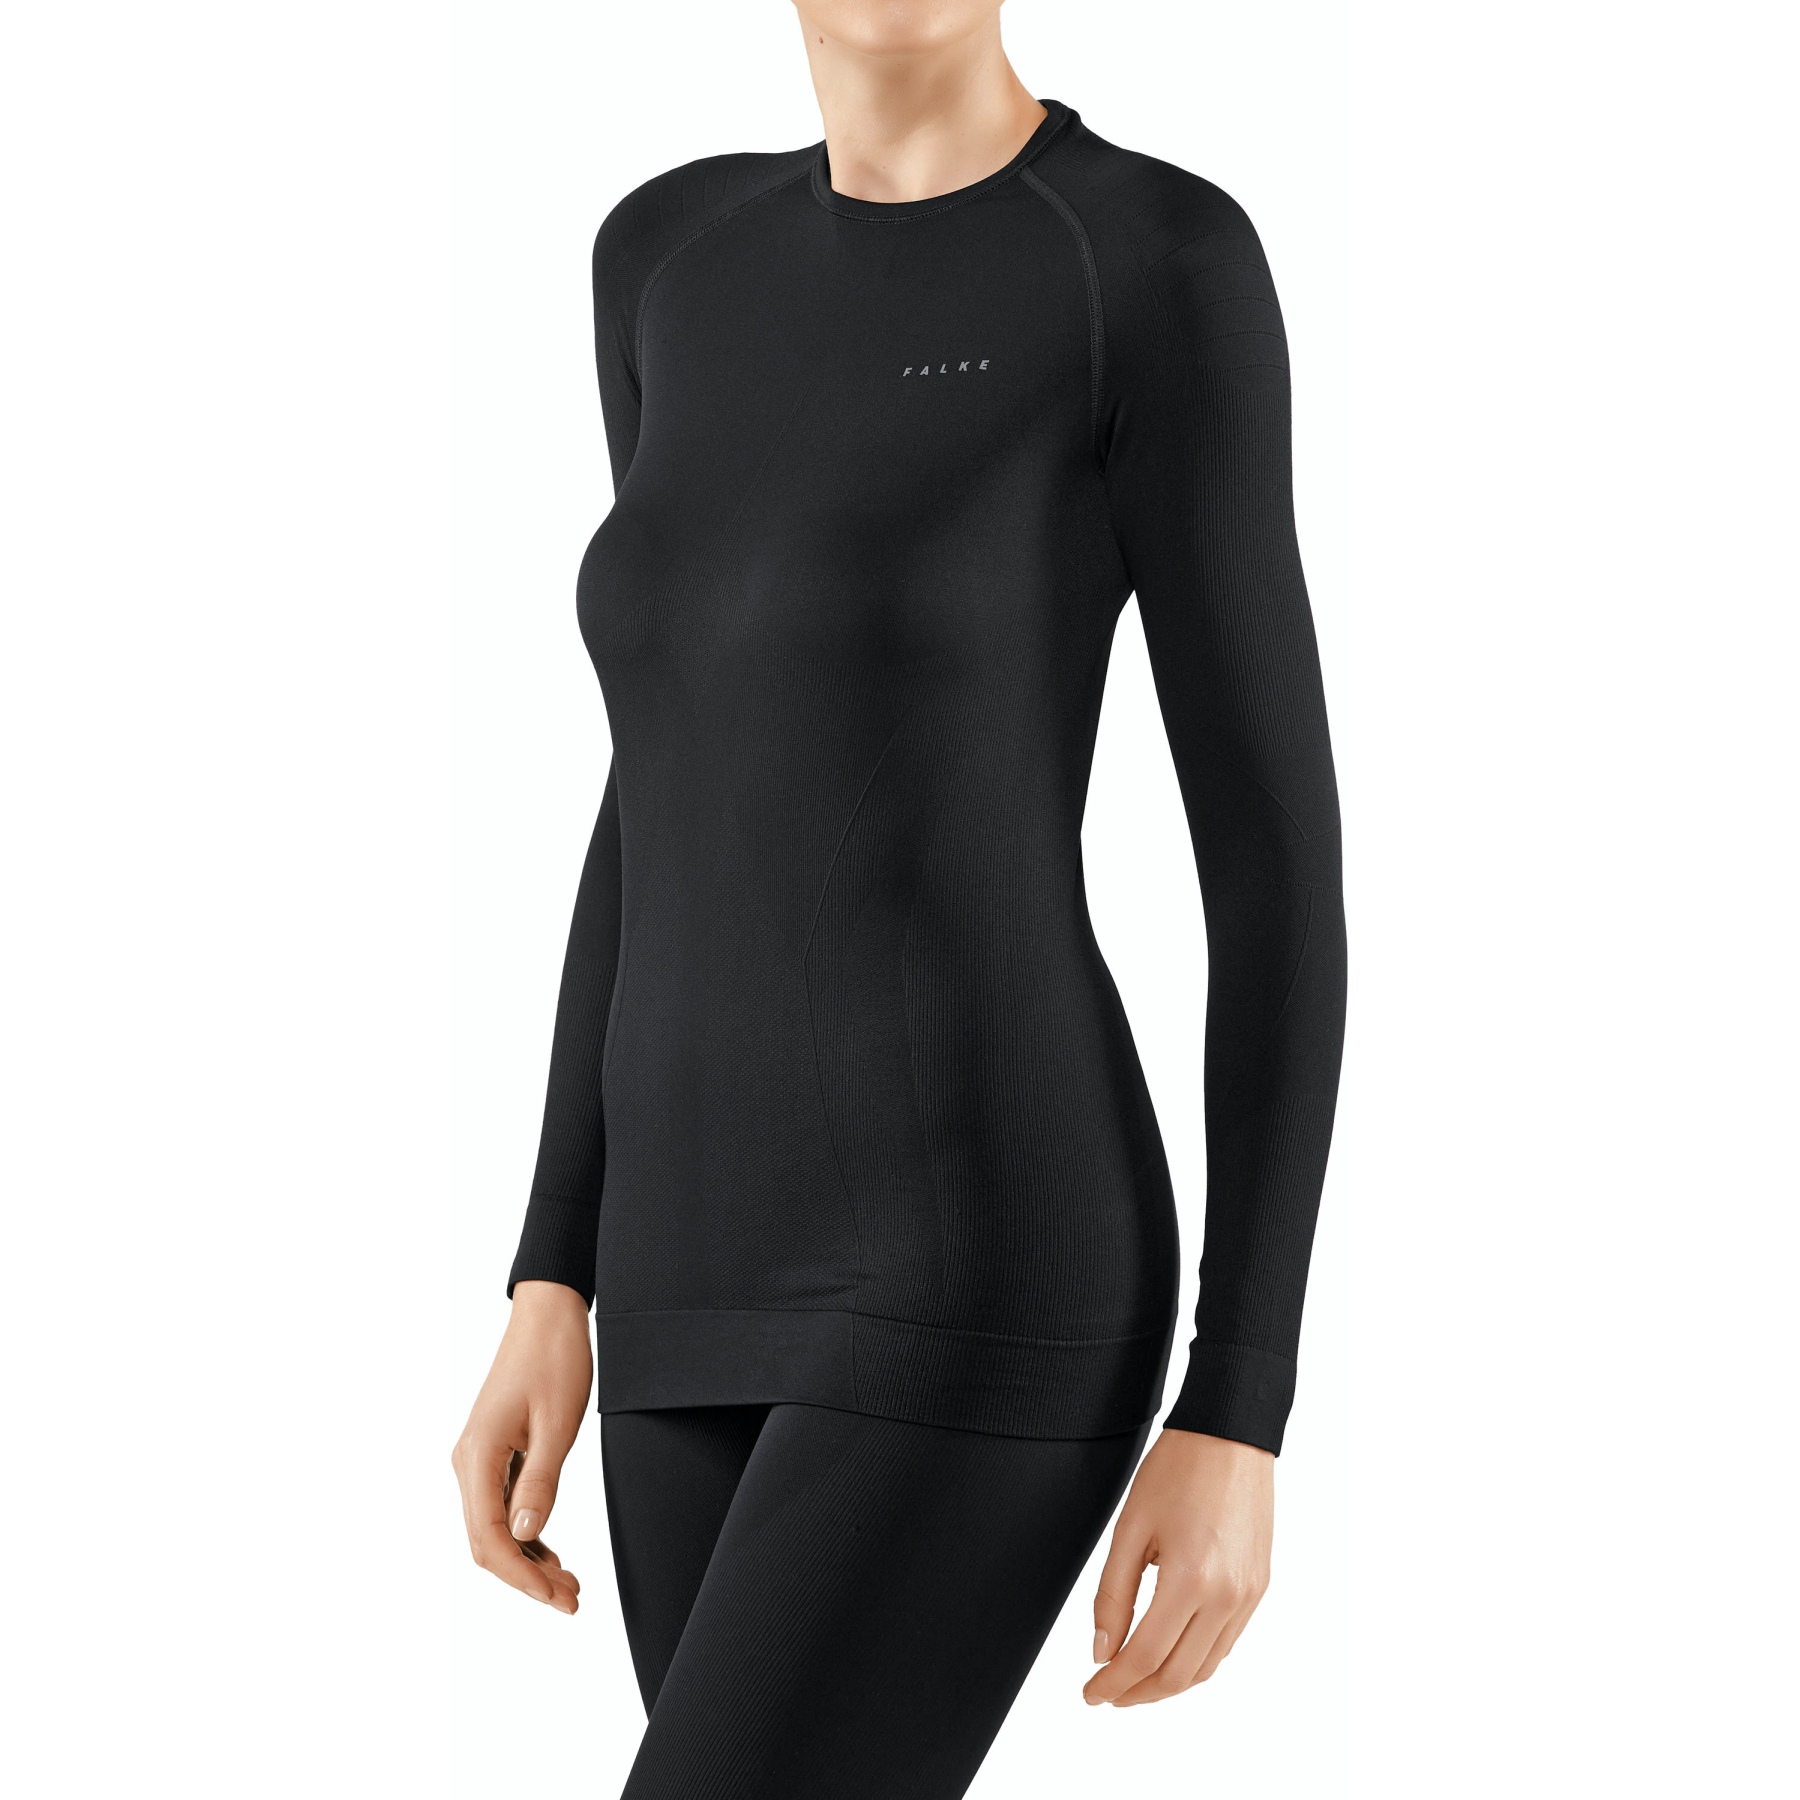 Productfoto van Falke Maximum Warm Shirt met Lange Mouwen Dames - zwart 3000